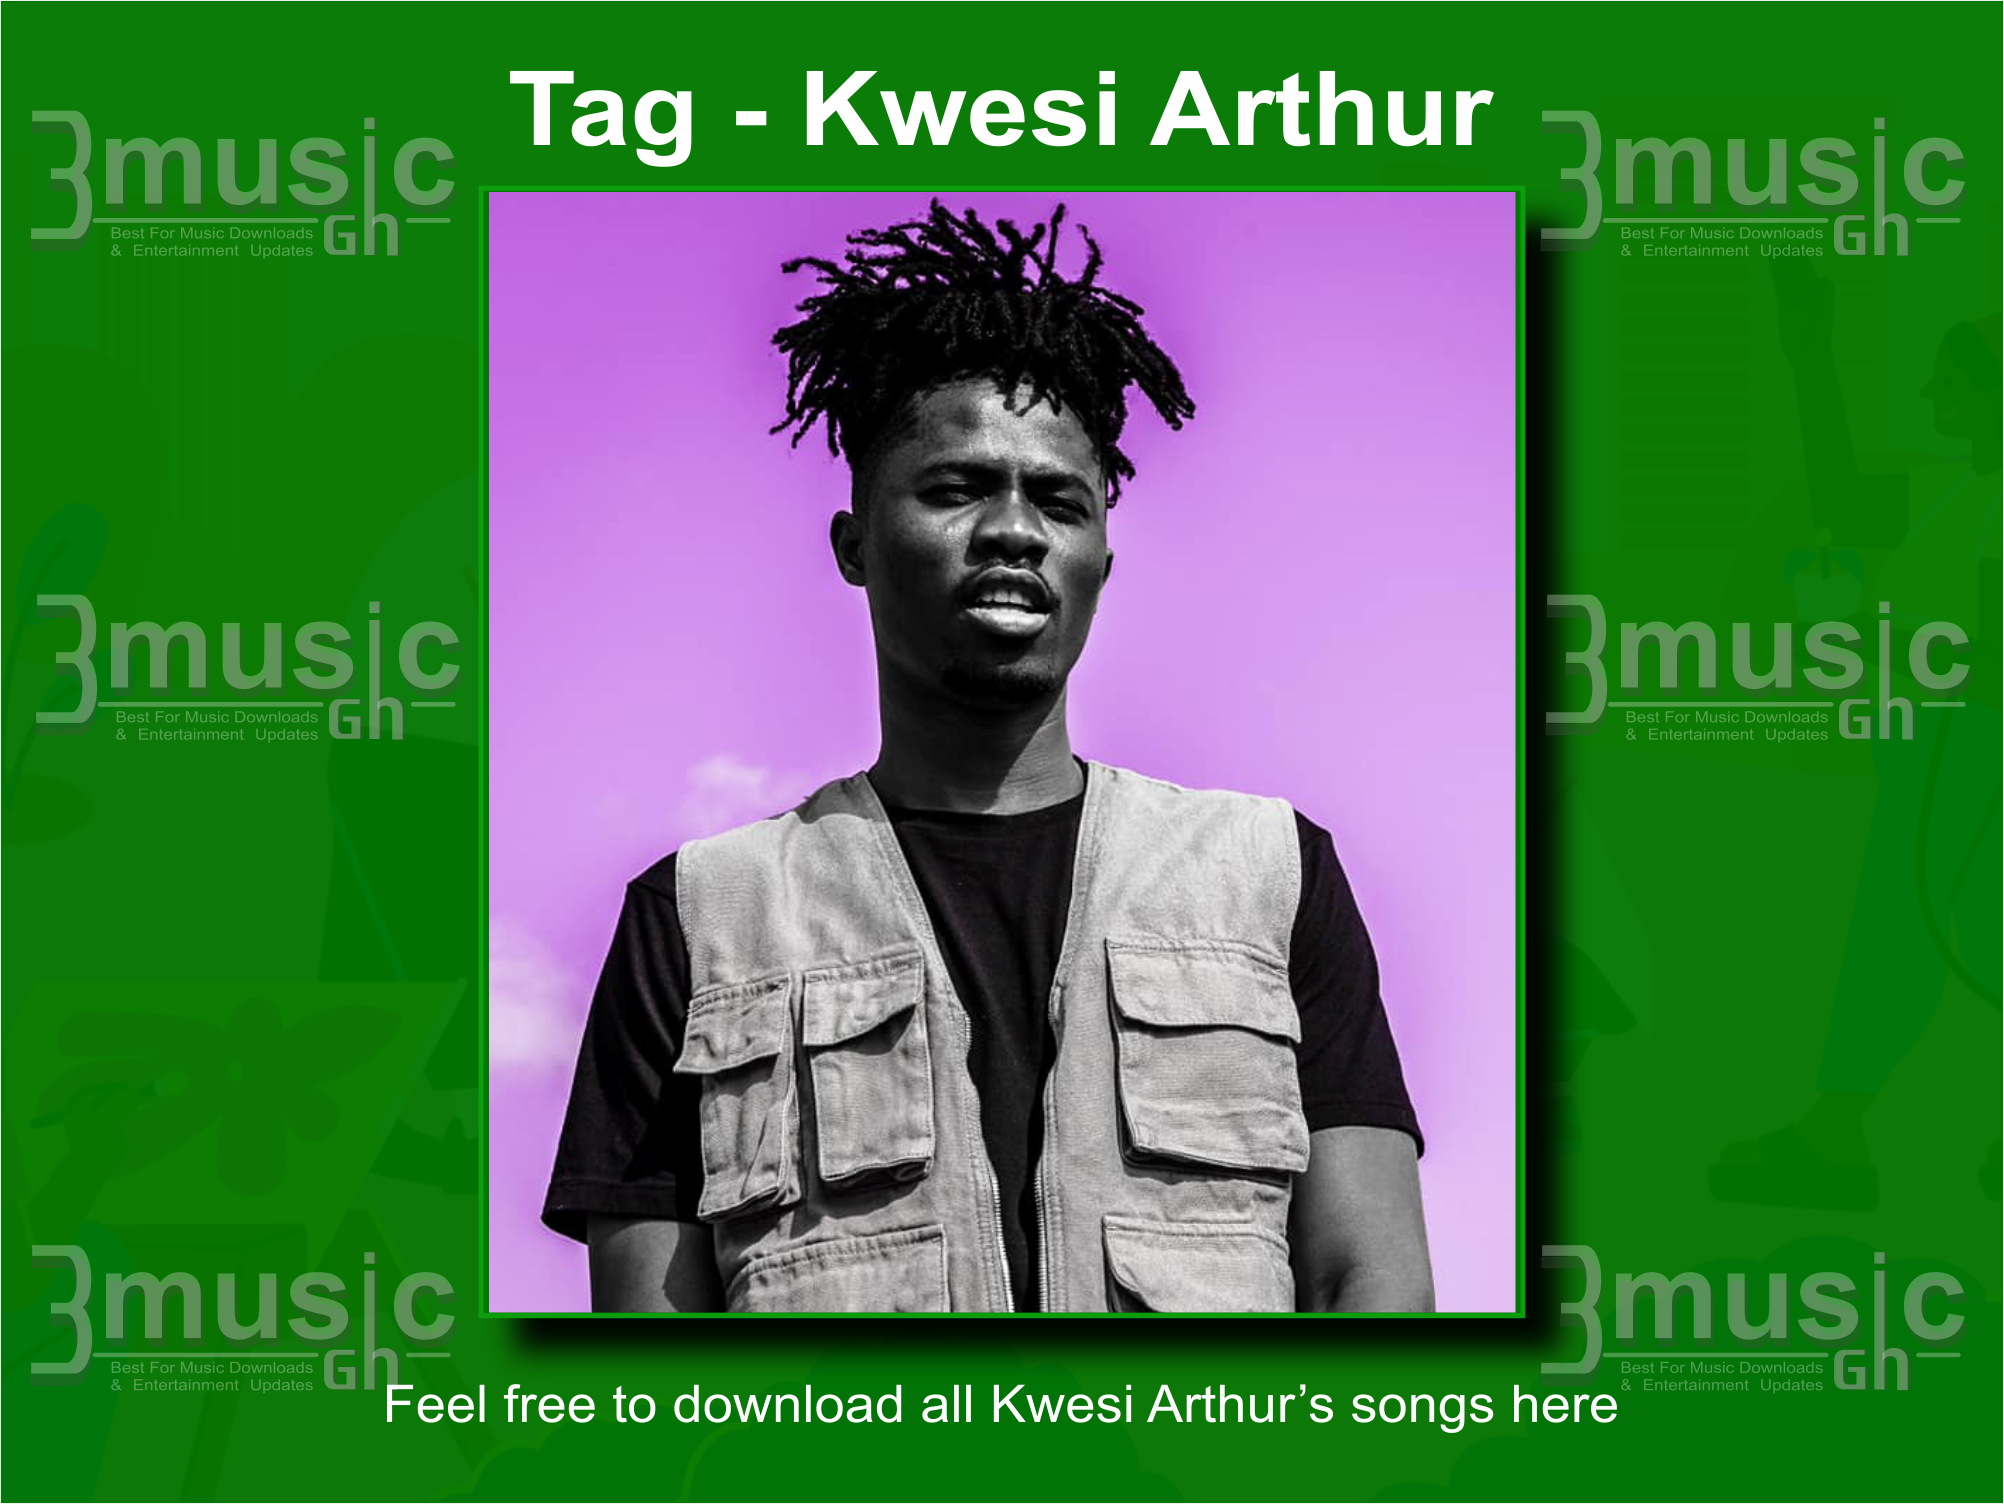 Kwesi Arthur songs all download_3musicgh.com